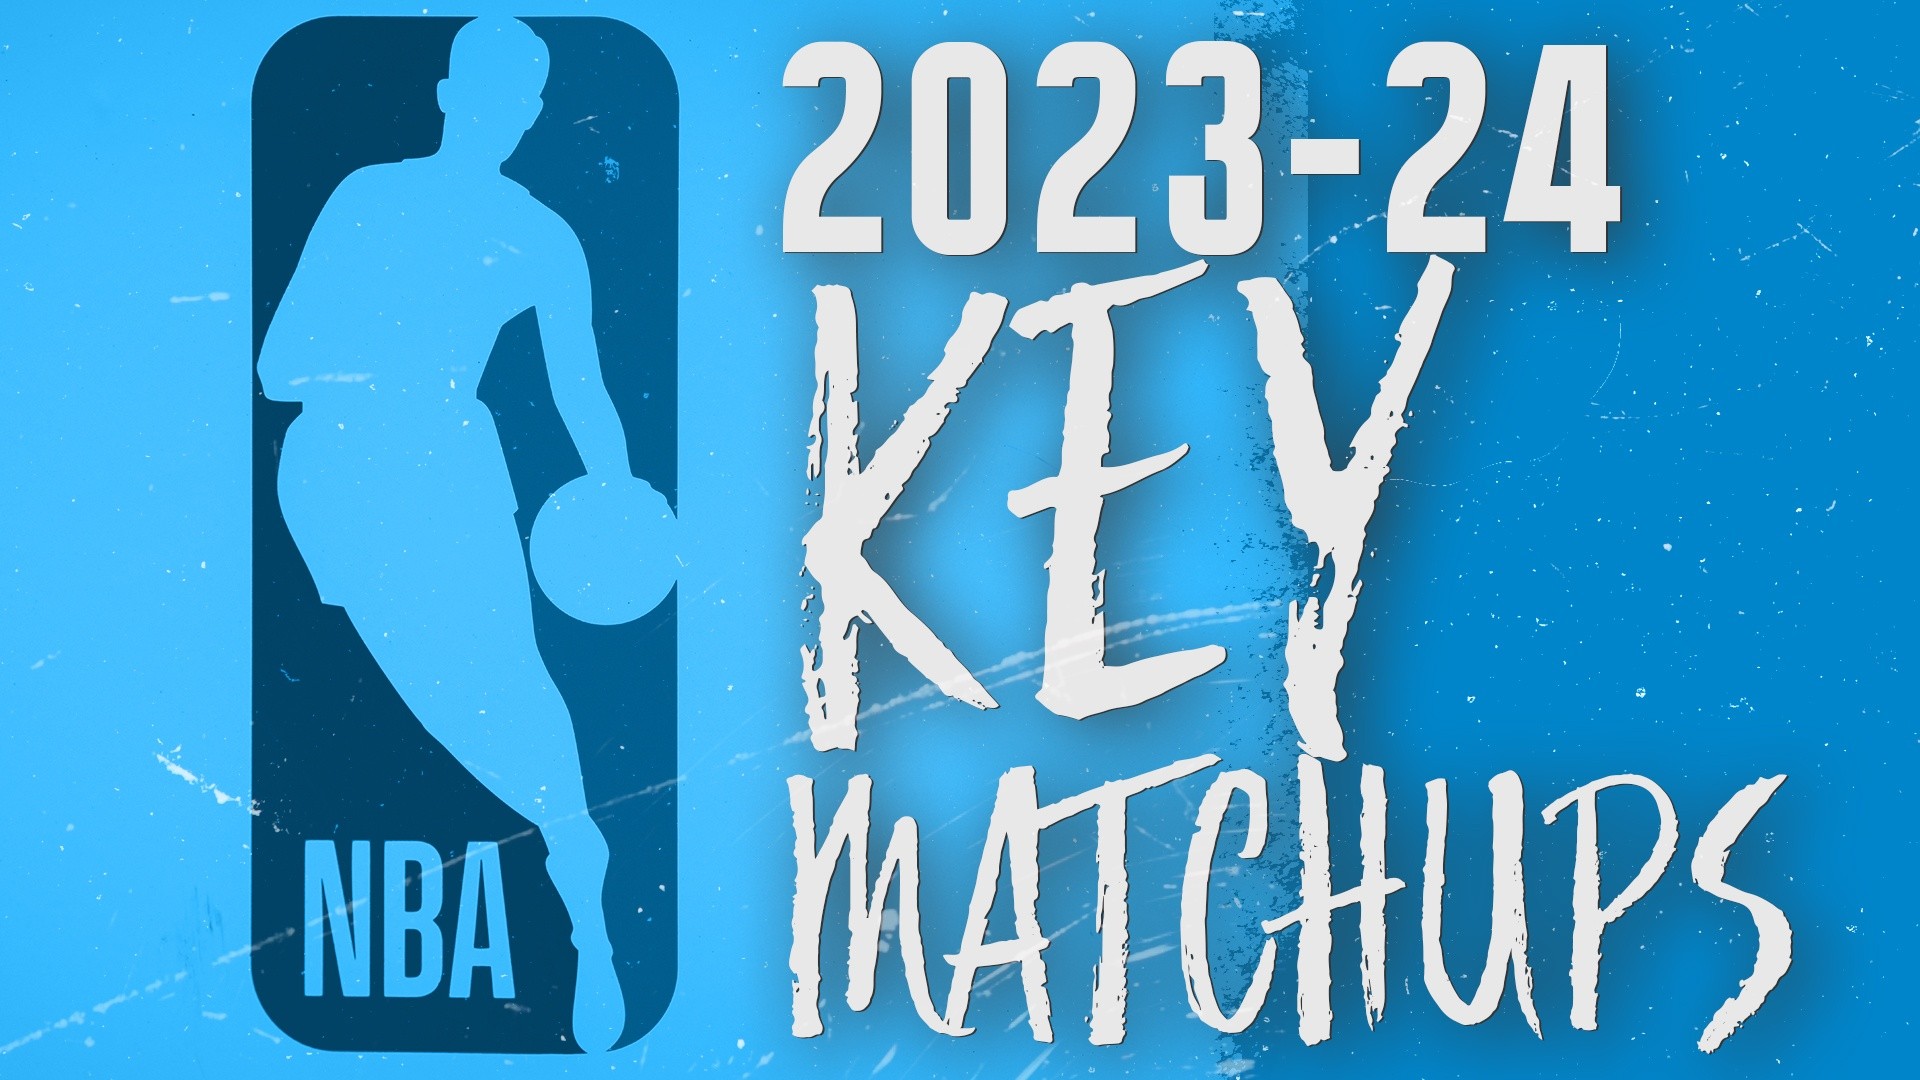 Key dates for 2023-24 NBA season